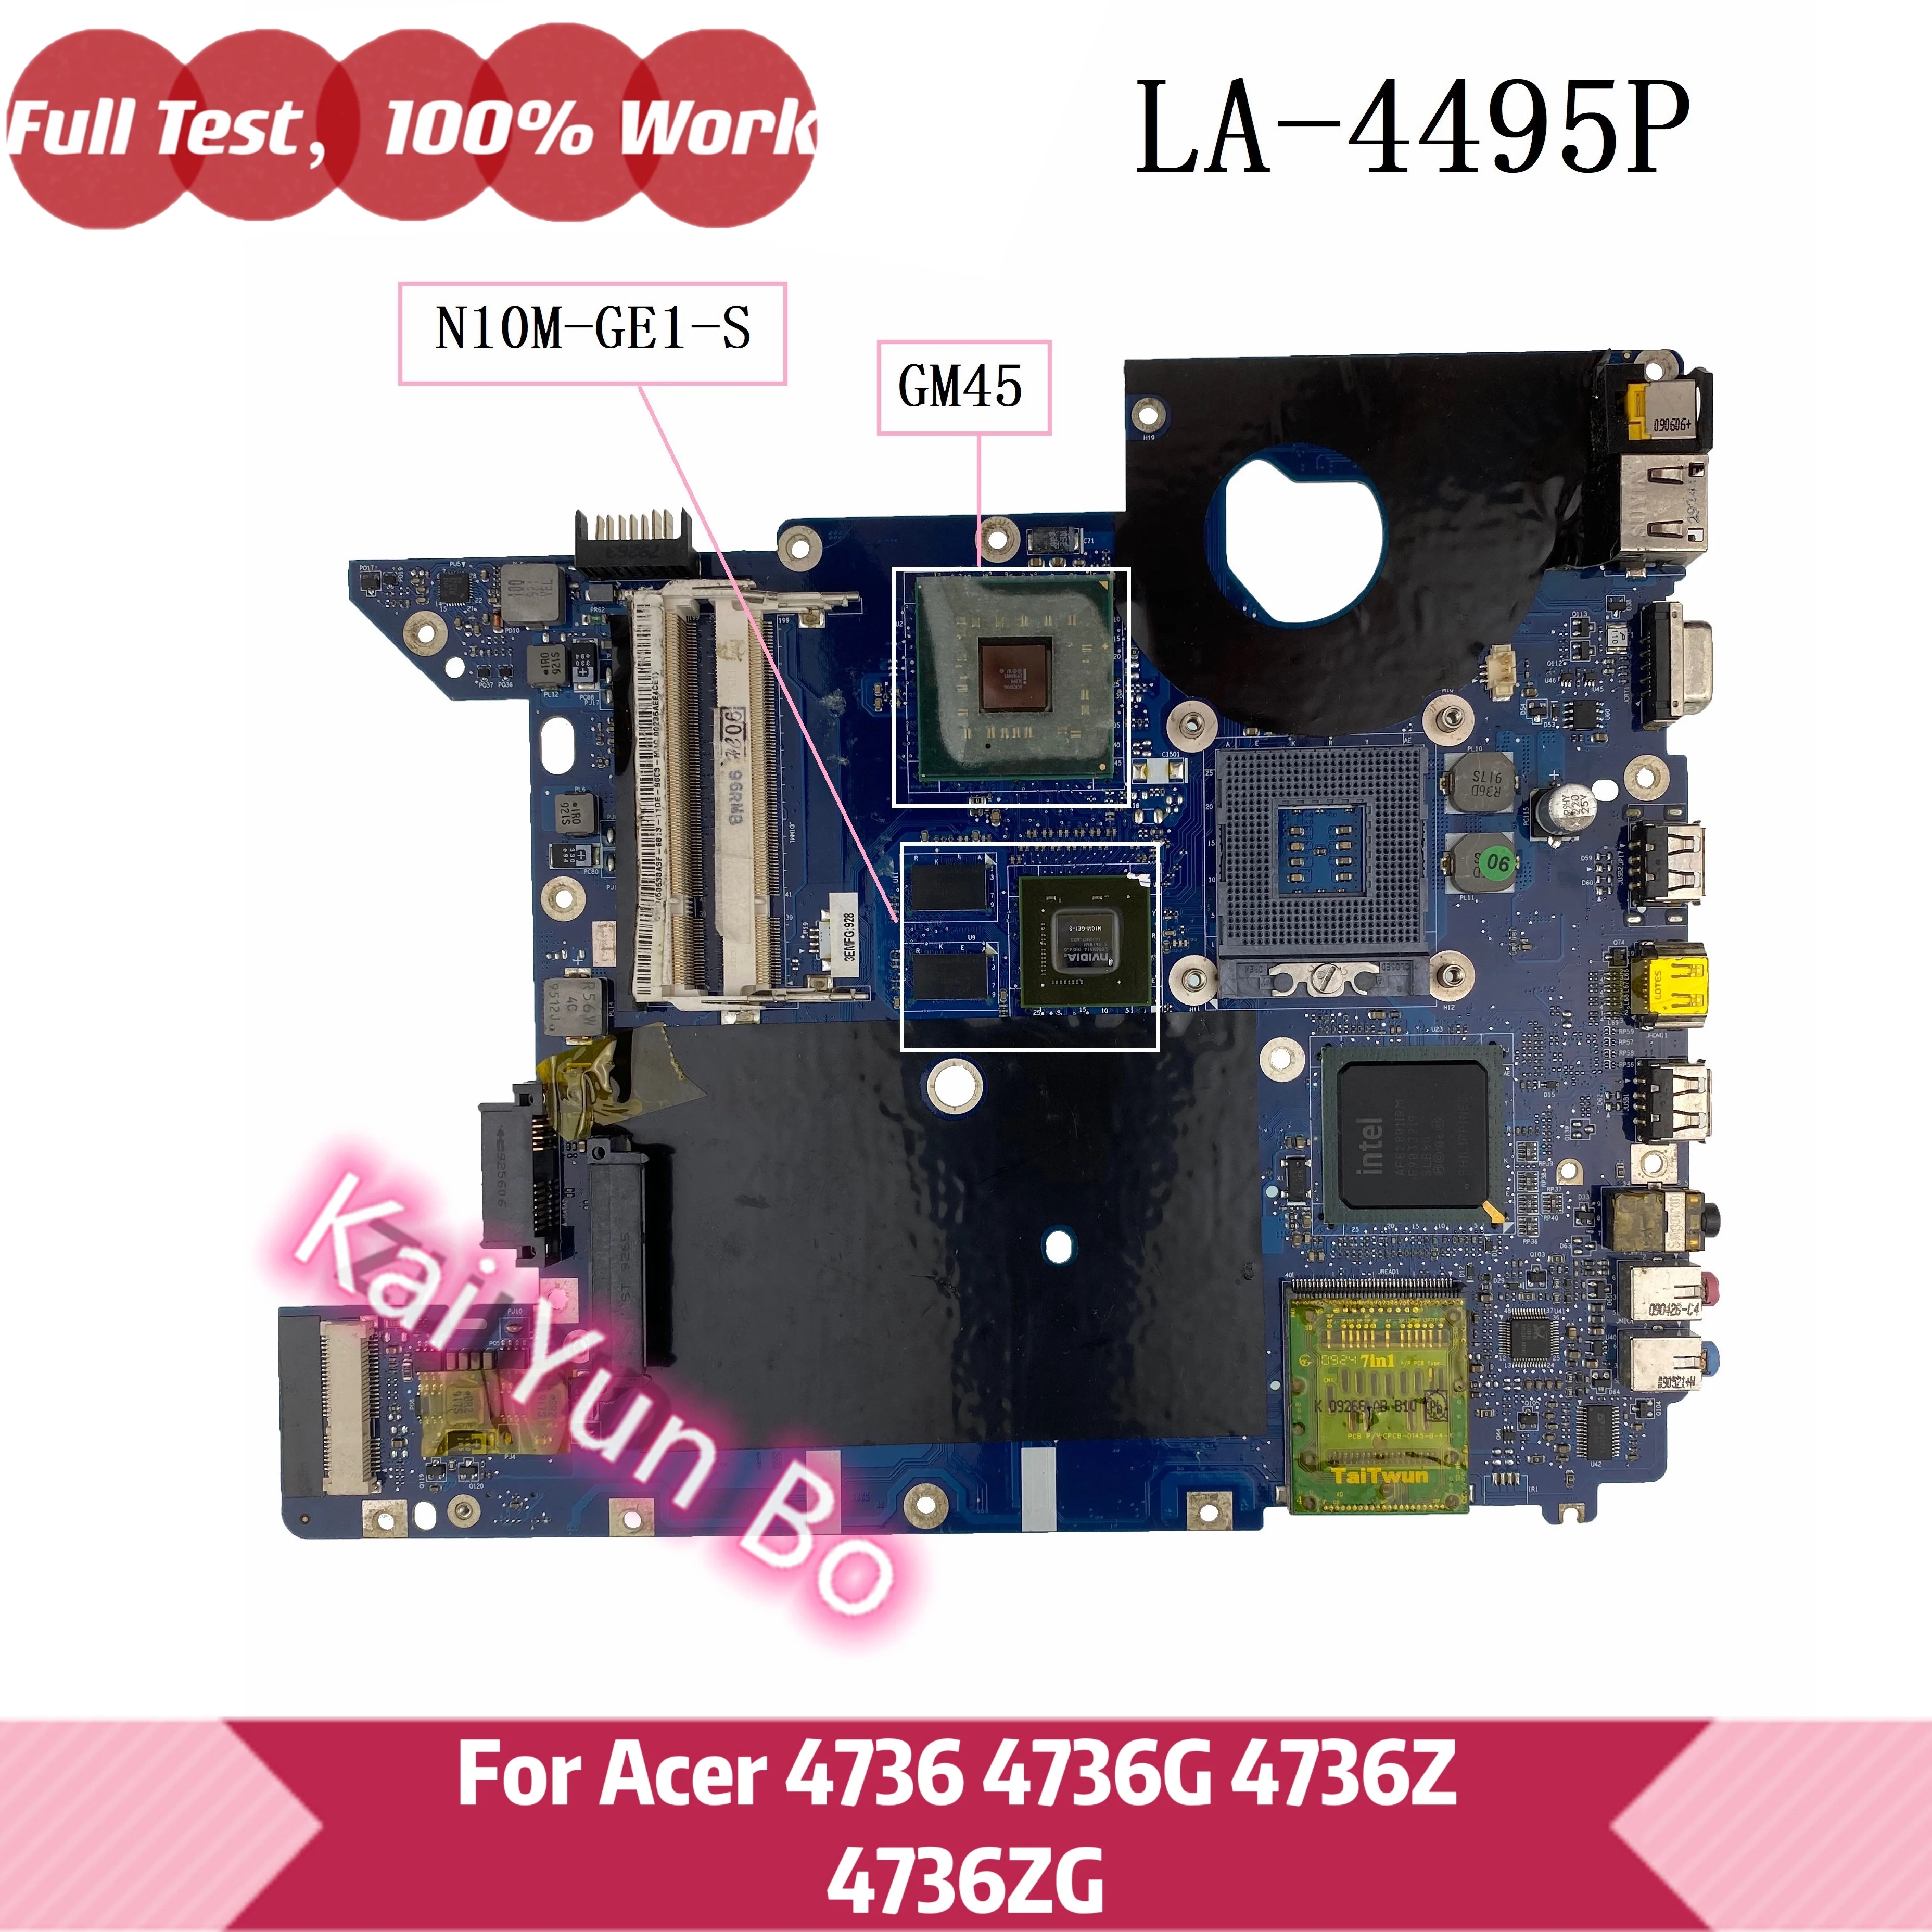 For Acer 4736 4736G 4736Z 4736ZG Laptop Motherboard KALG0 LA-4495P With GM45 N10M-GE1-S GPU DDR2 100% Tested OK